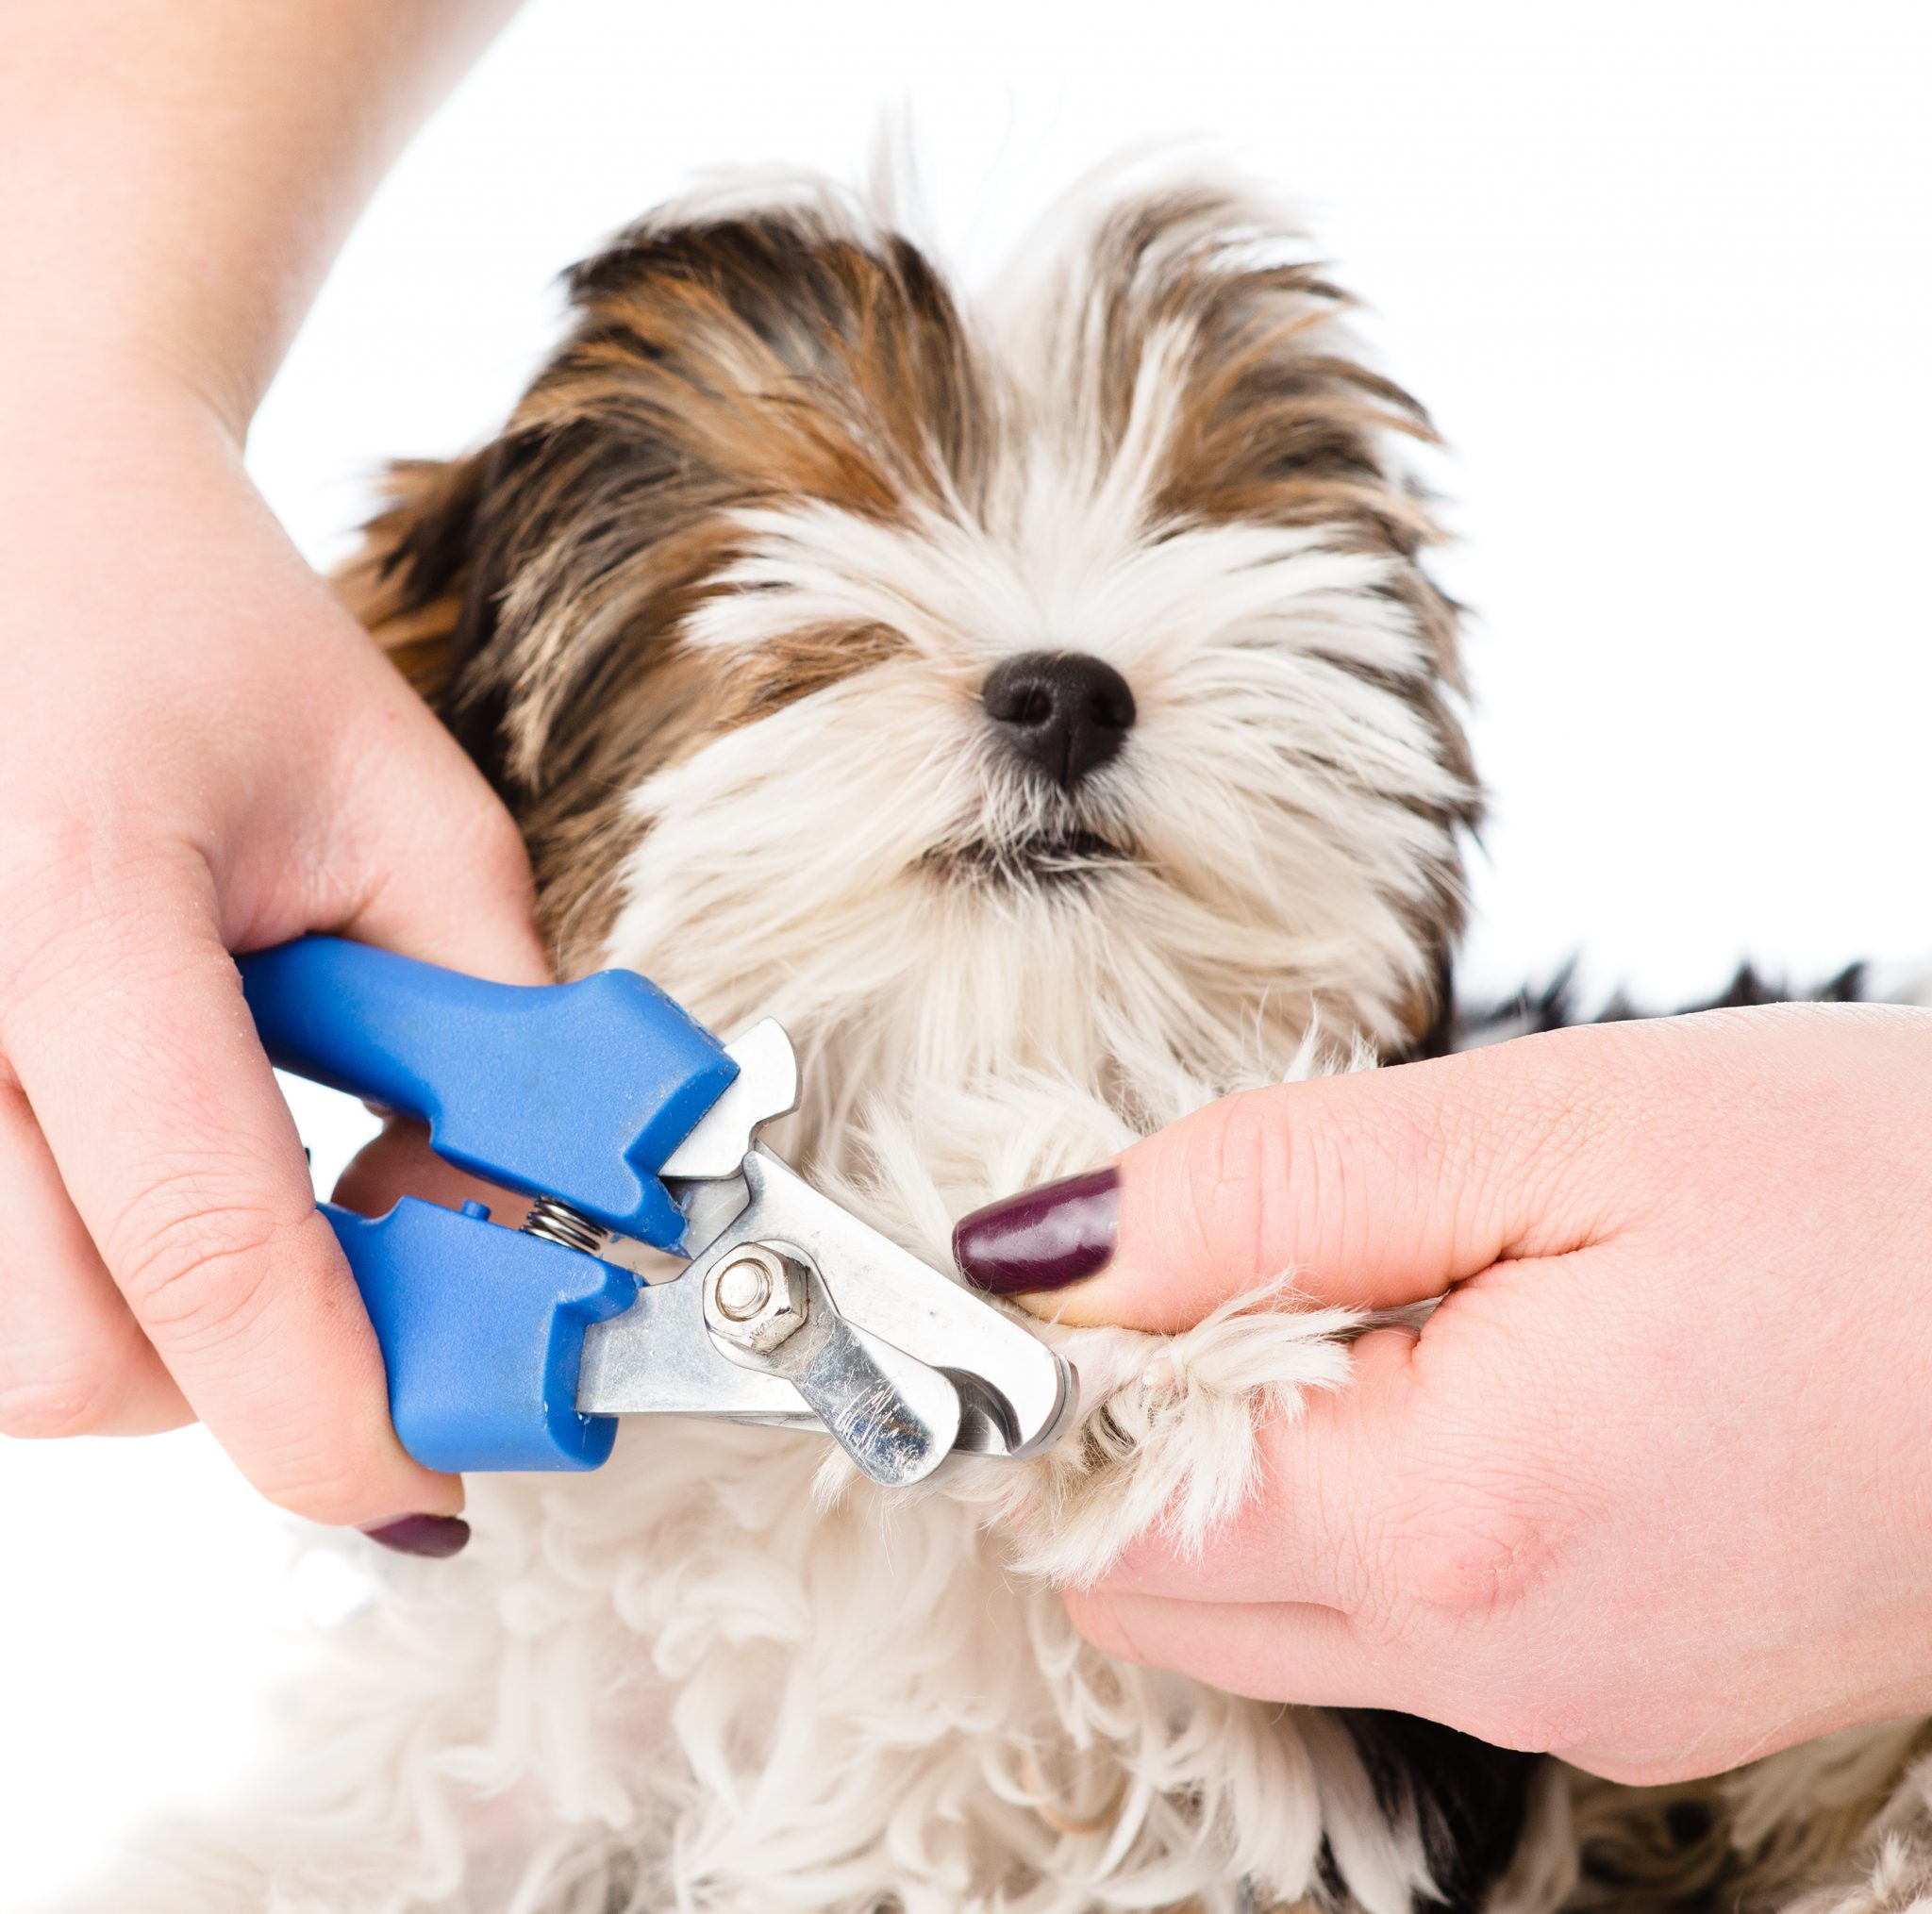 How Do I Cut My Dog's Nails Without Hurting Him? - Washingtonian